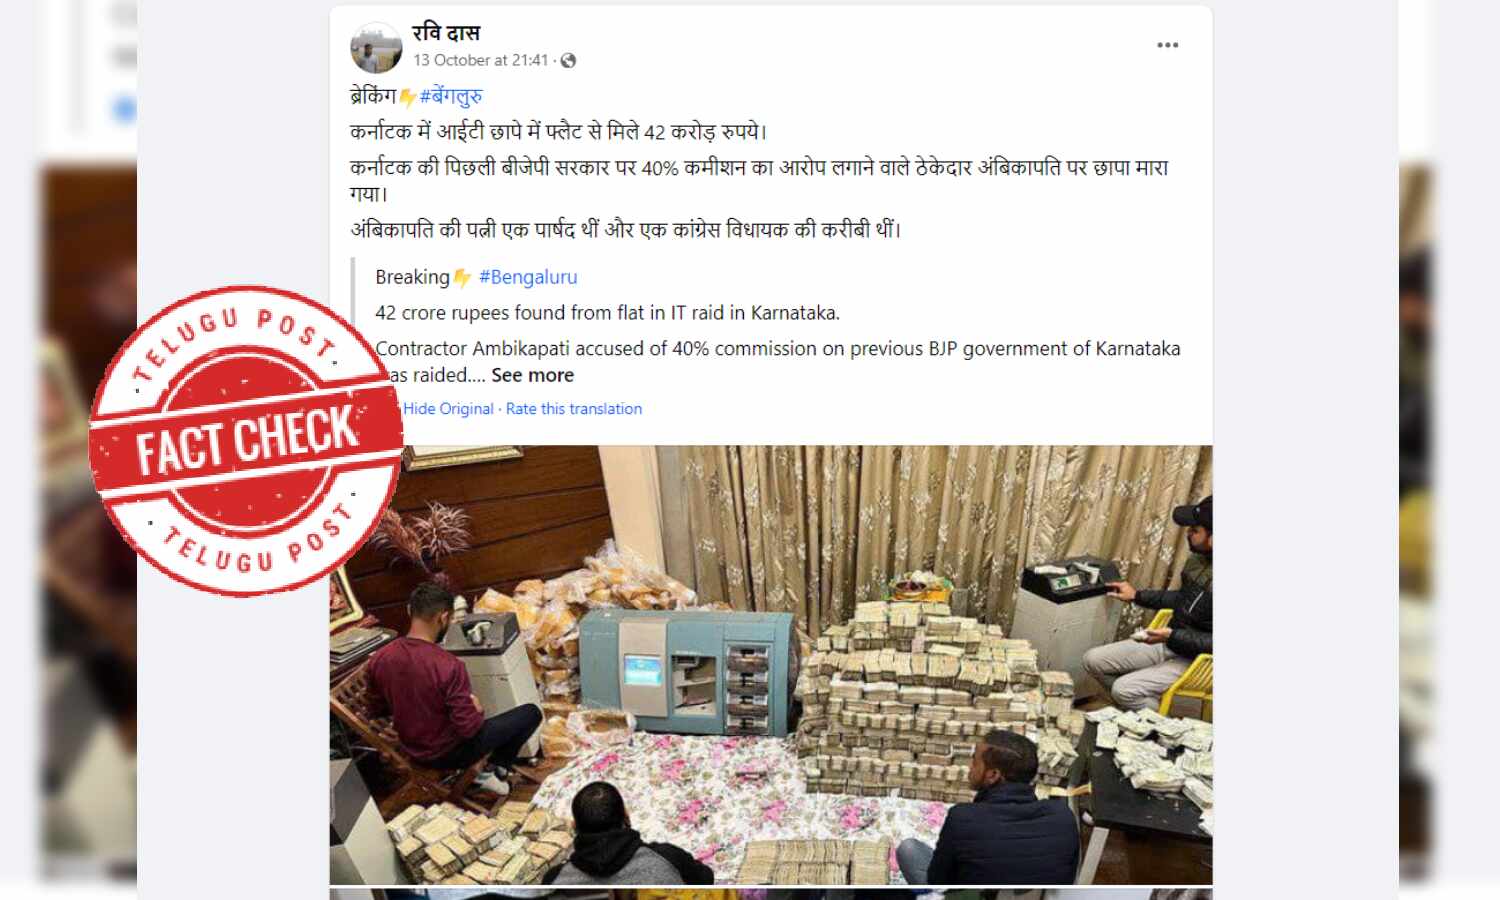 Kanpur IT Raid: Rs 150 Crore Recovered In IT Raid On Piyush Jain UP  Businessman